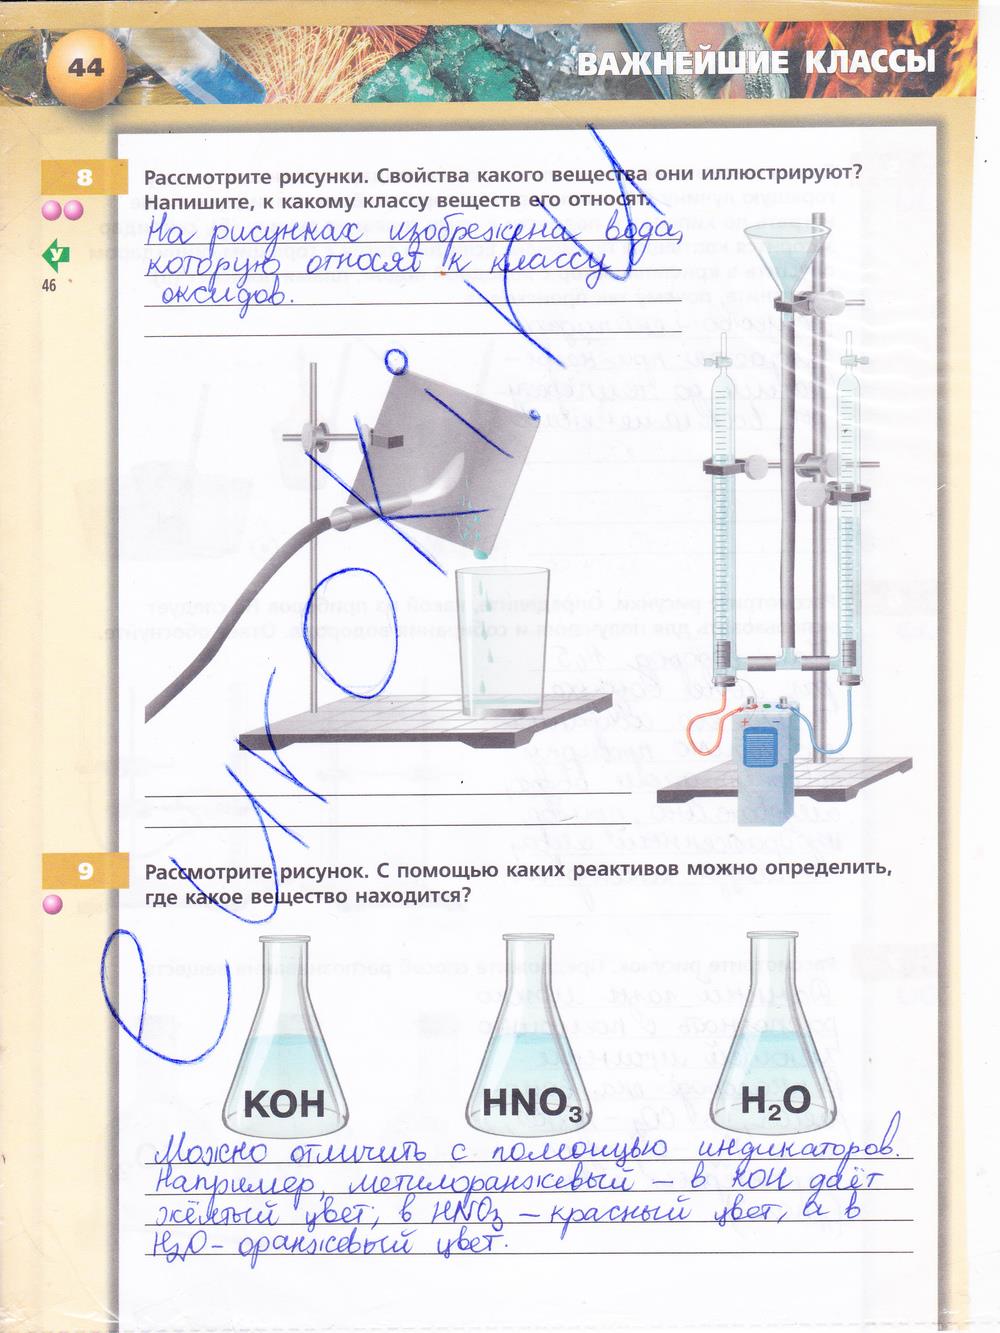 гдз 8 класс тетрадь-тренажёр страница 44 химия Гара